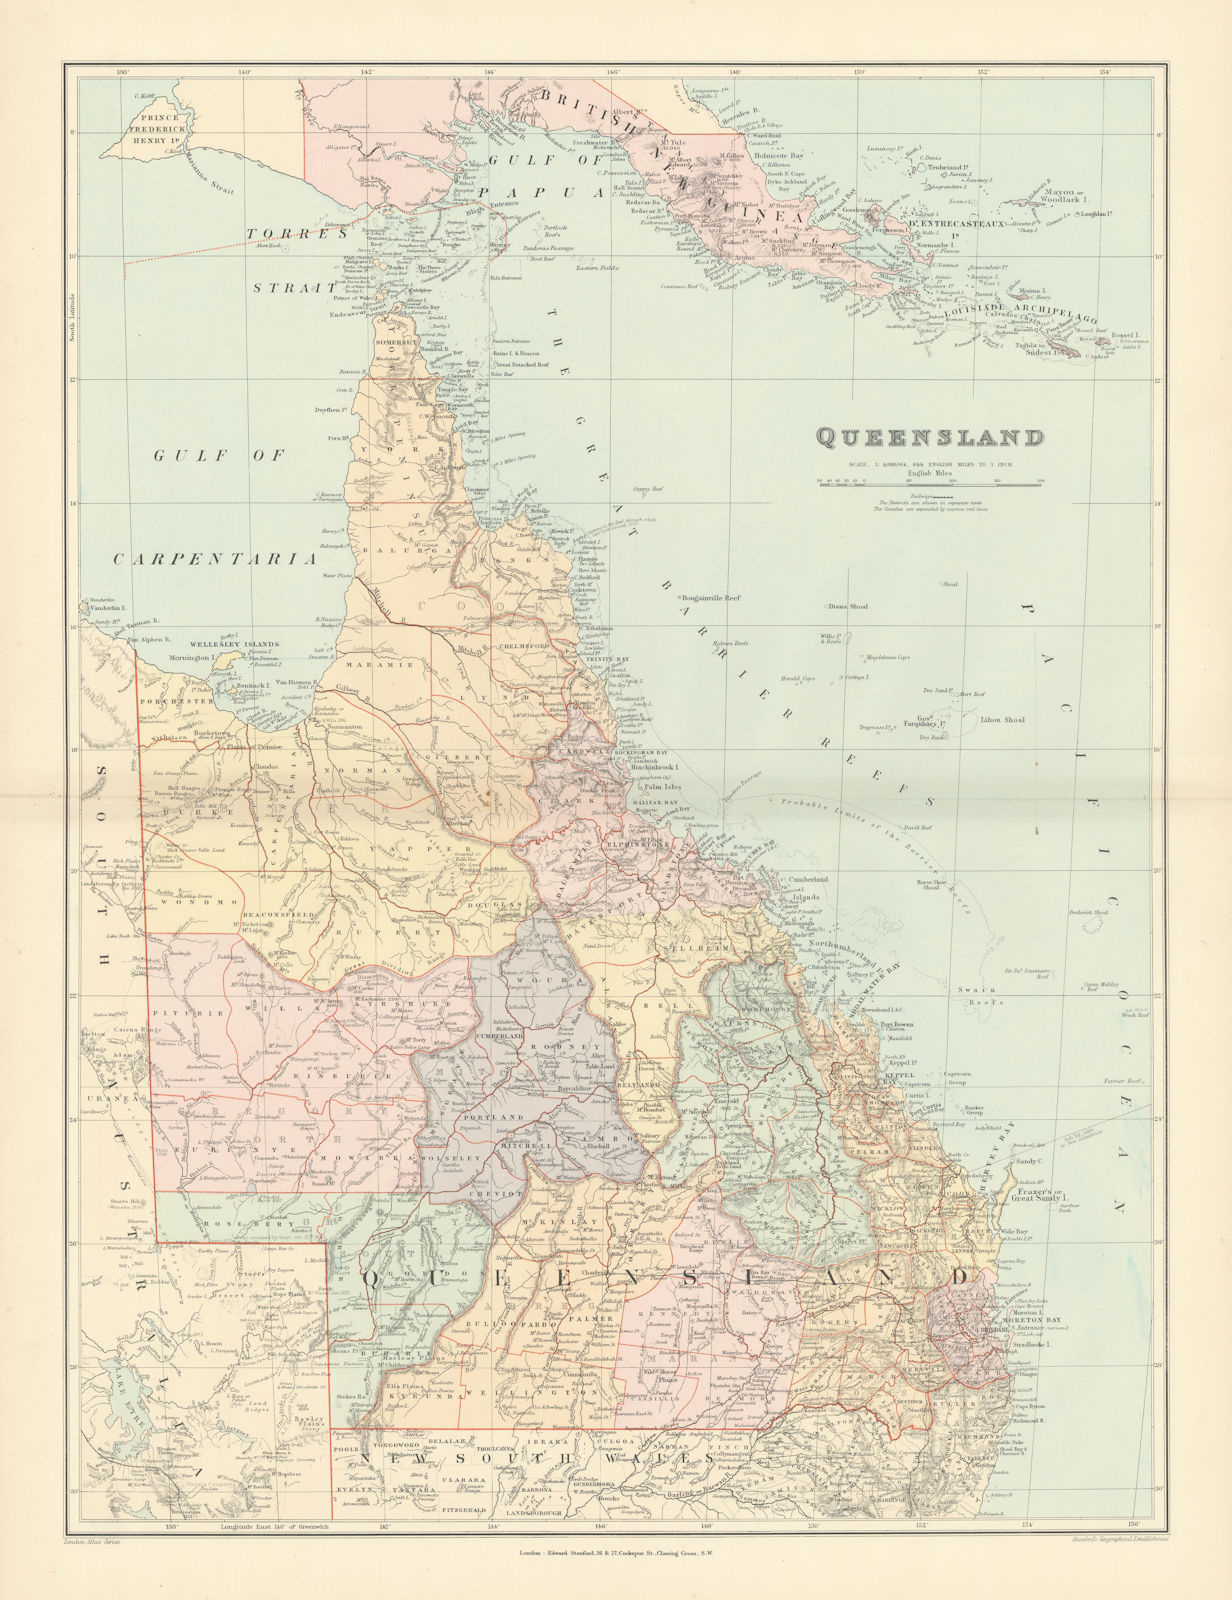 Queensland. British New Guinea. Great Barrier Reef. 68x52cm. STANFORD 1896 map